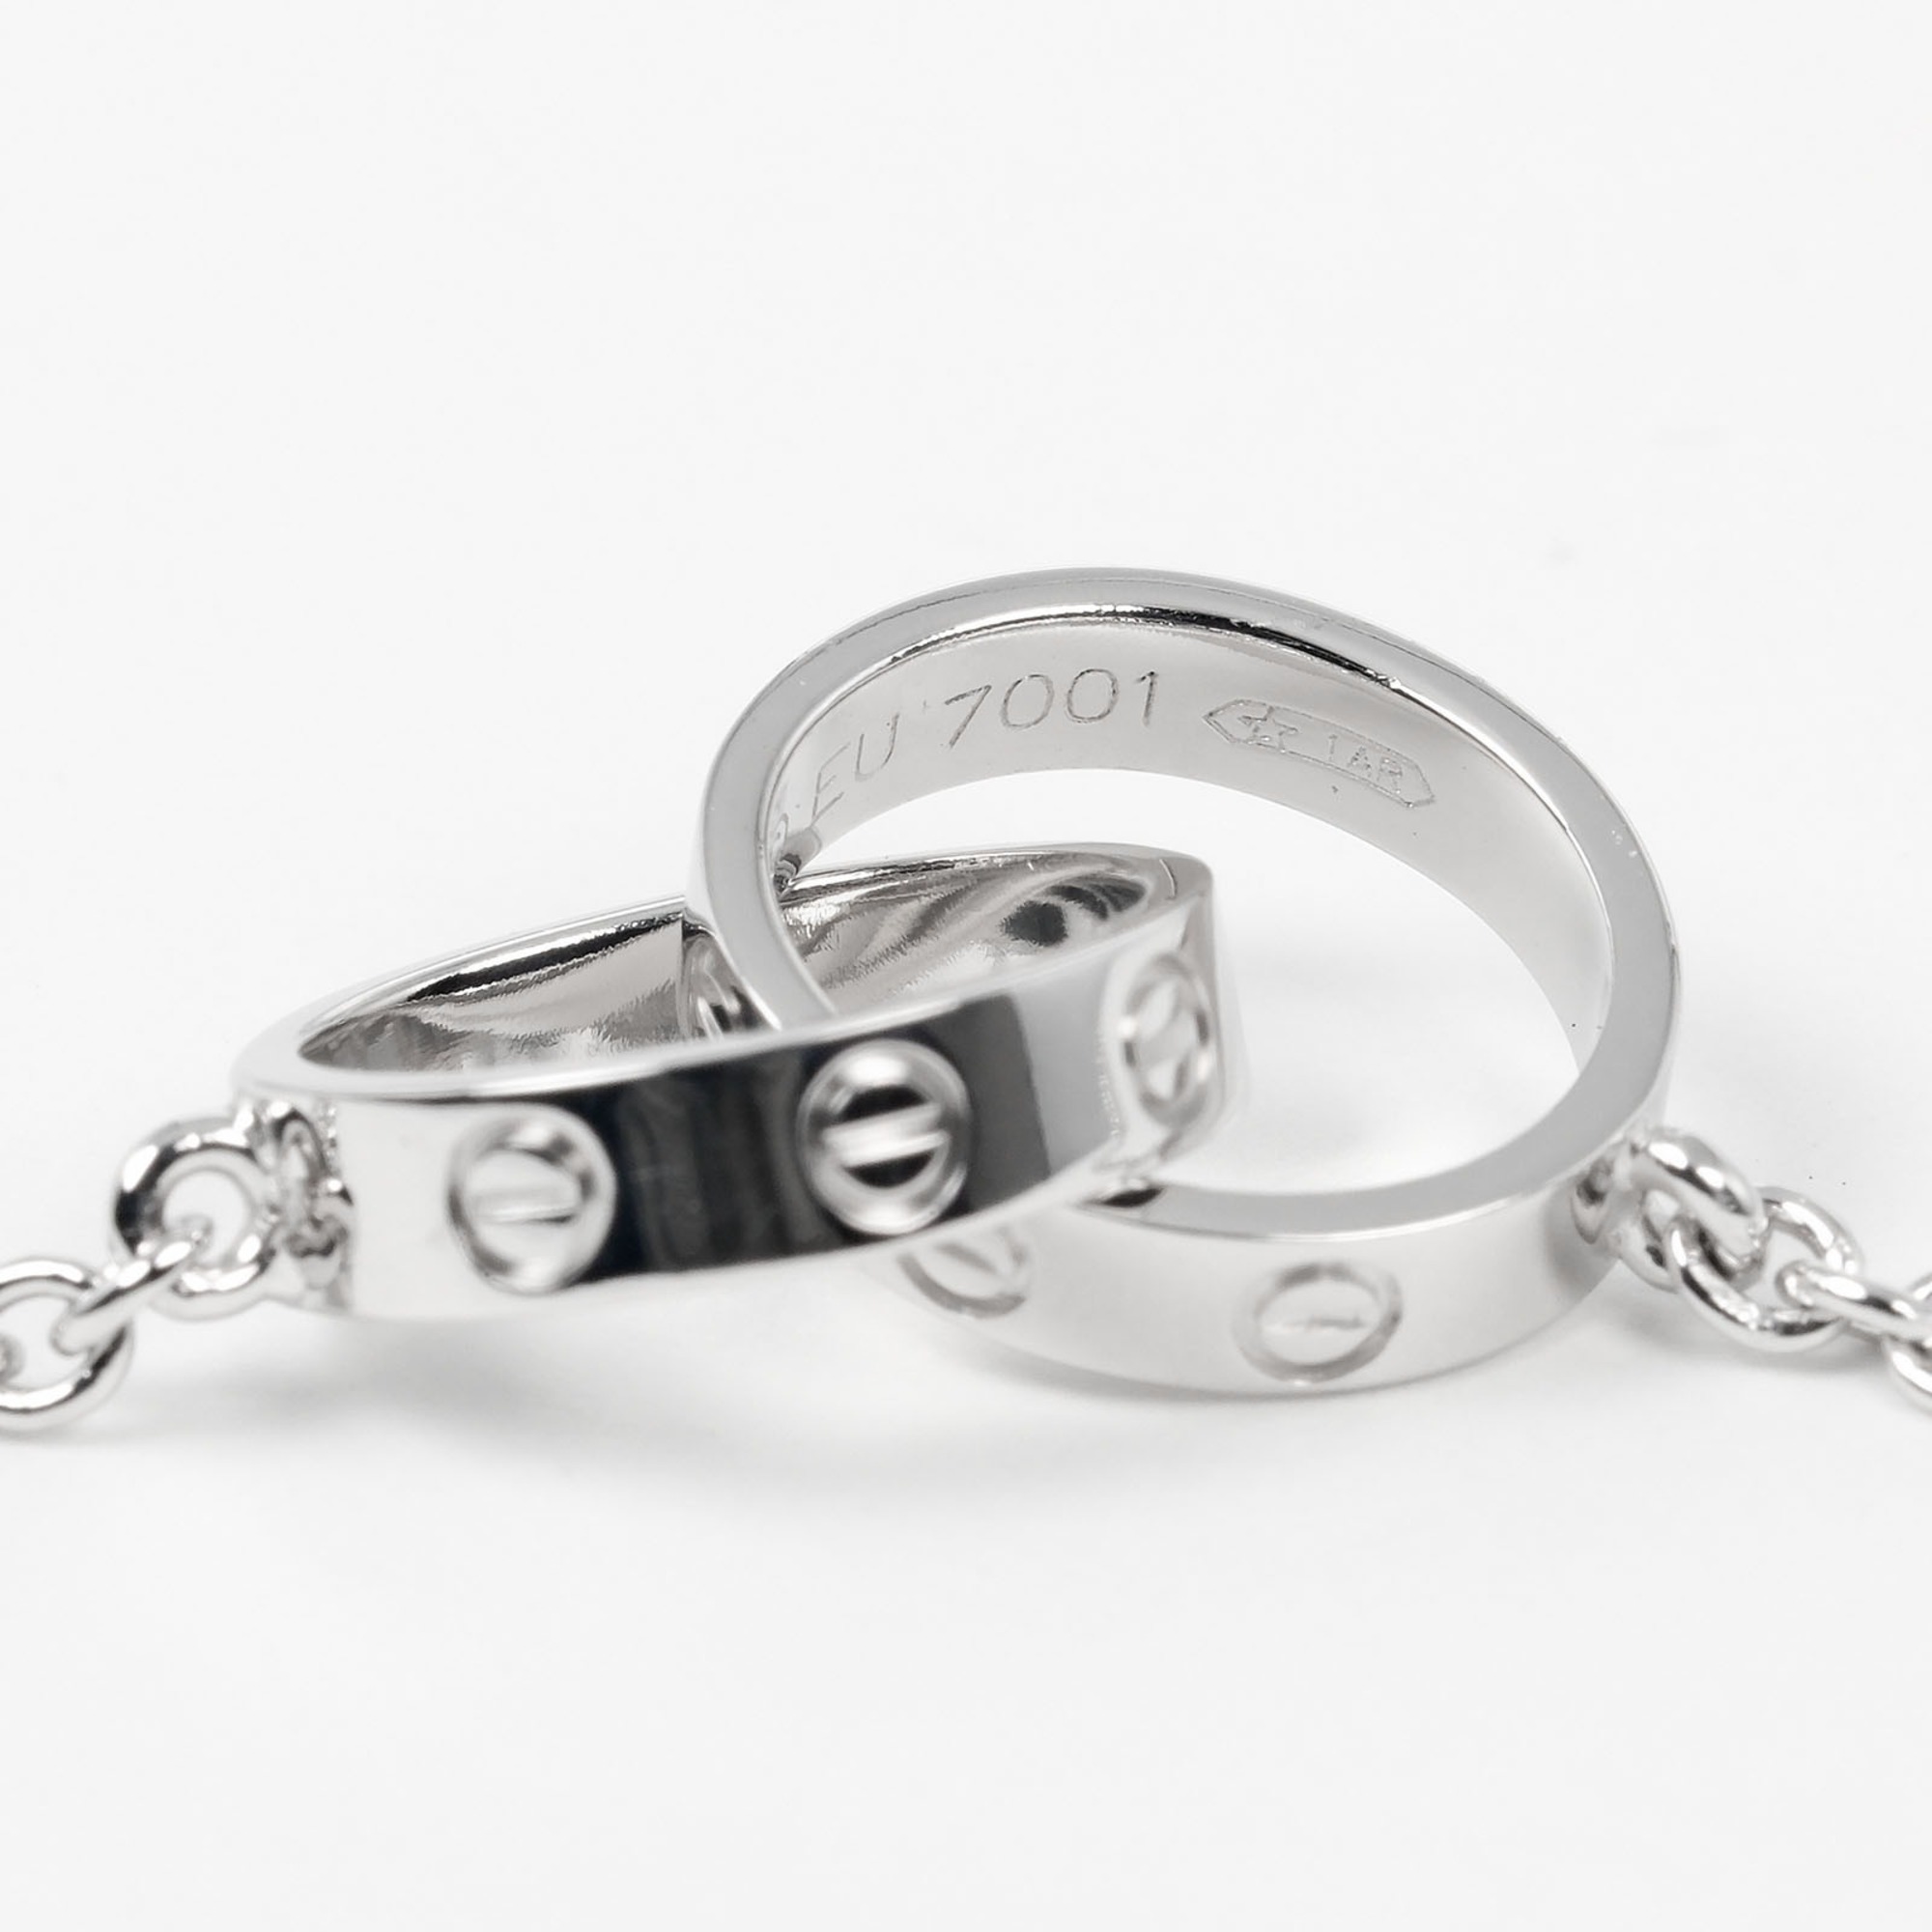 Cartier Baby Love Bracelet, 15.5cm wrist, K18 WG, white gold, approx. 4.06g, I132124050